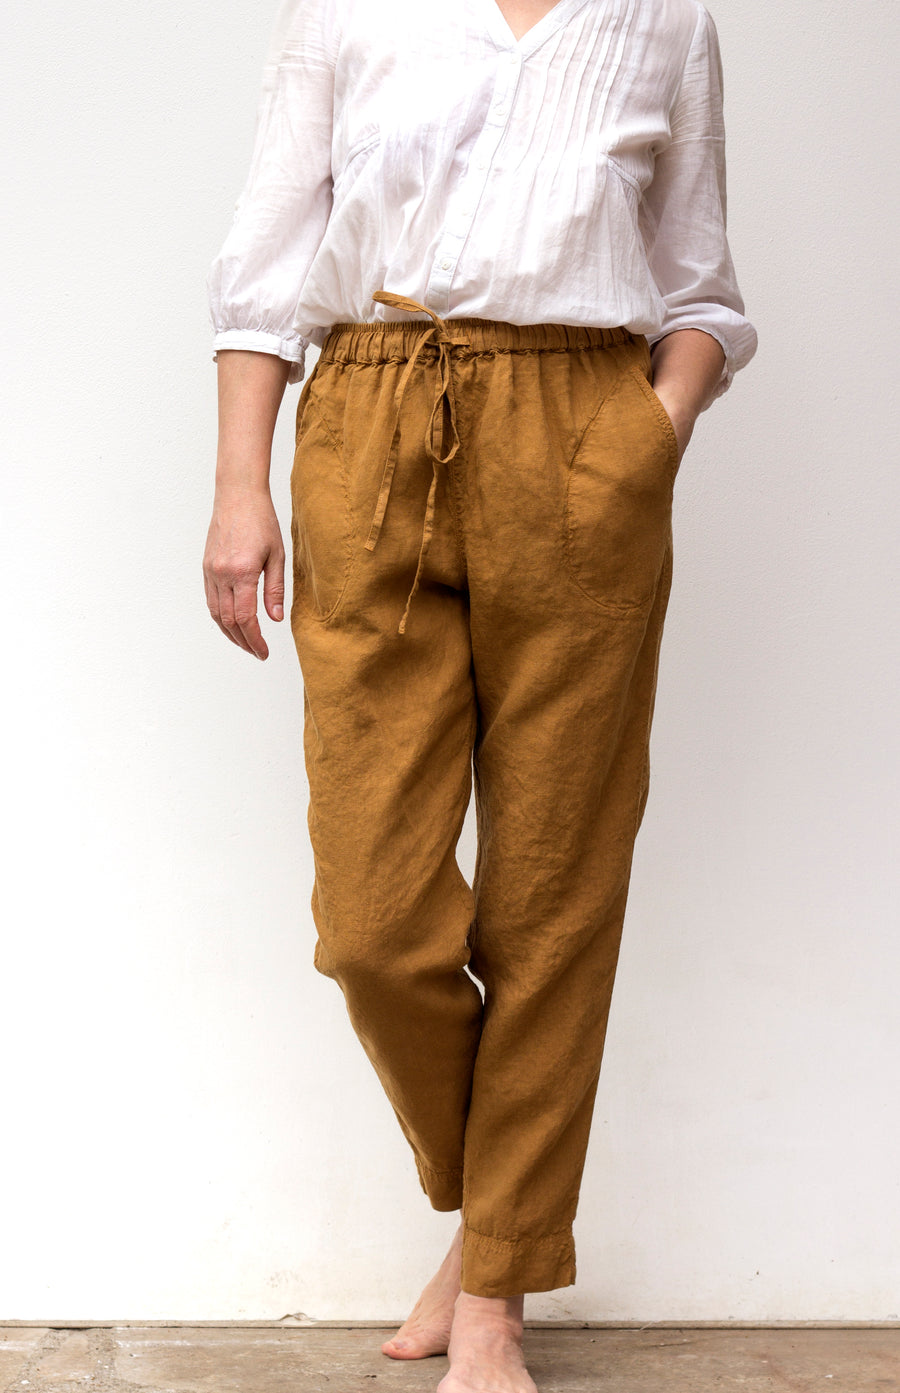 Extra jemné kalhoty v odstínu Wood Thrush